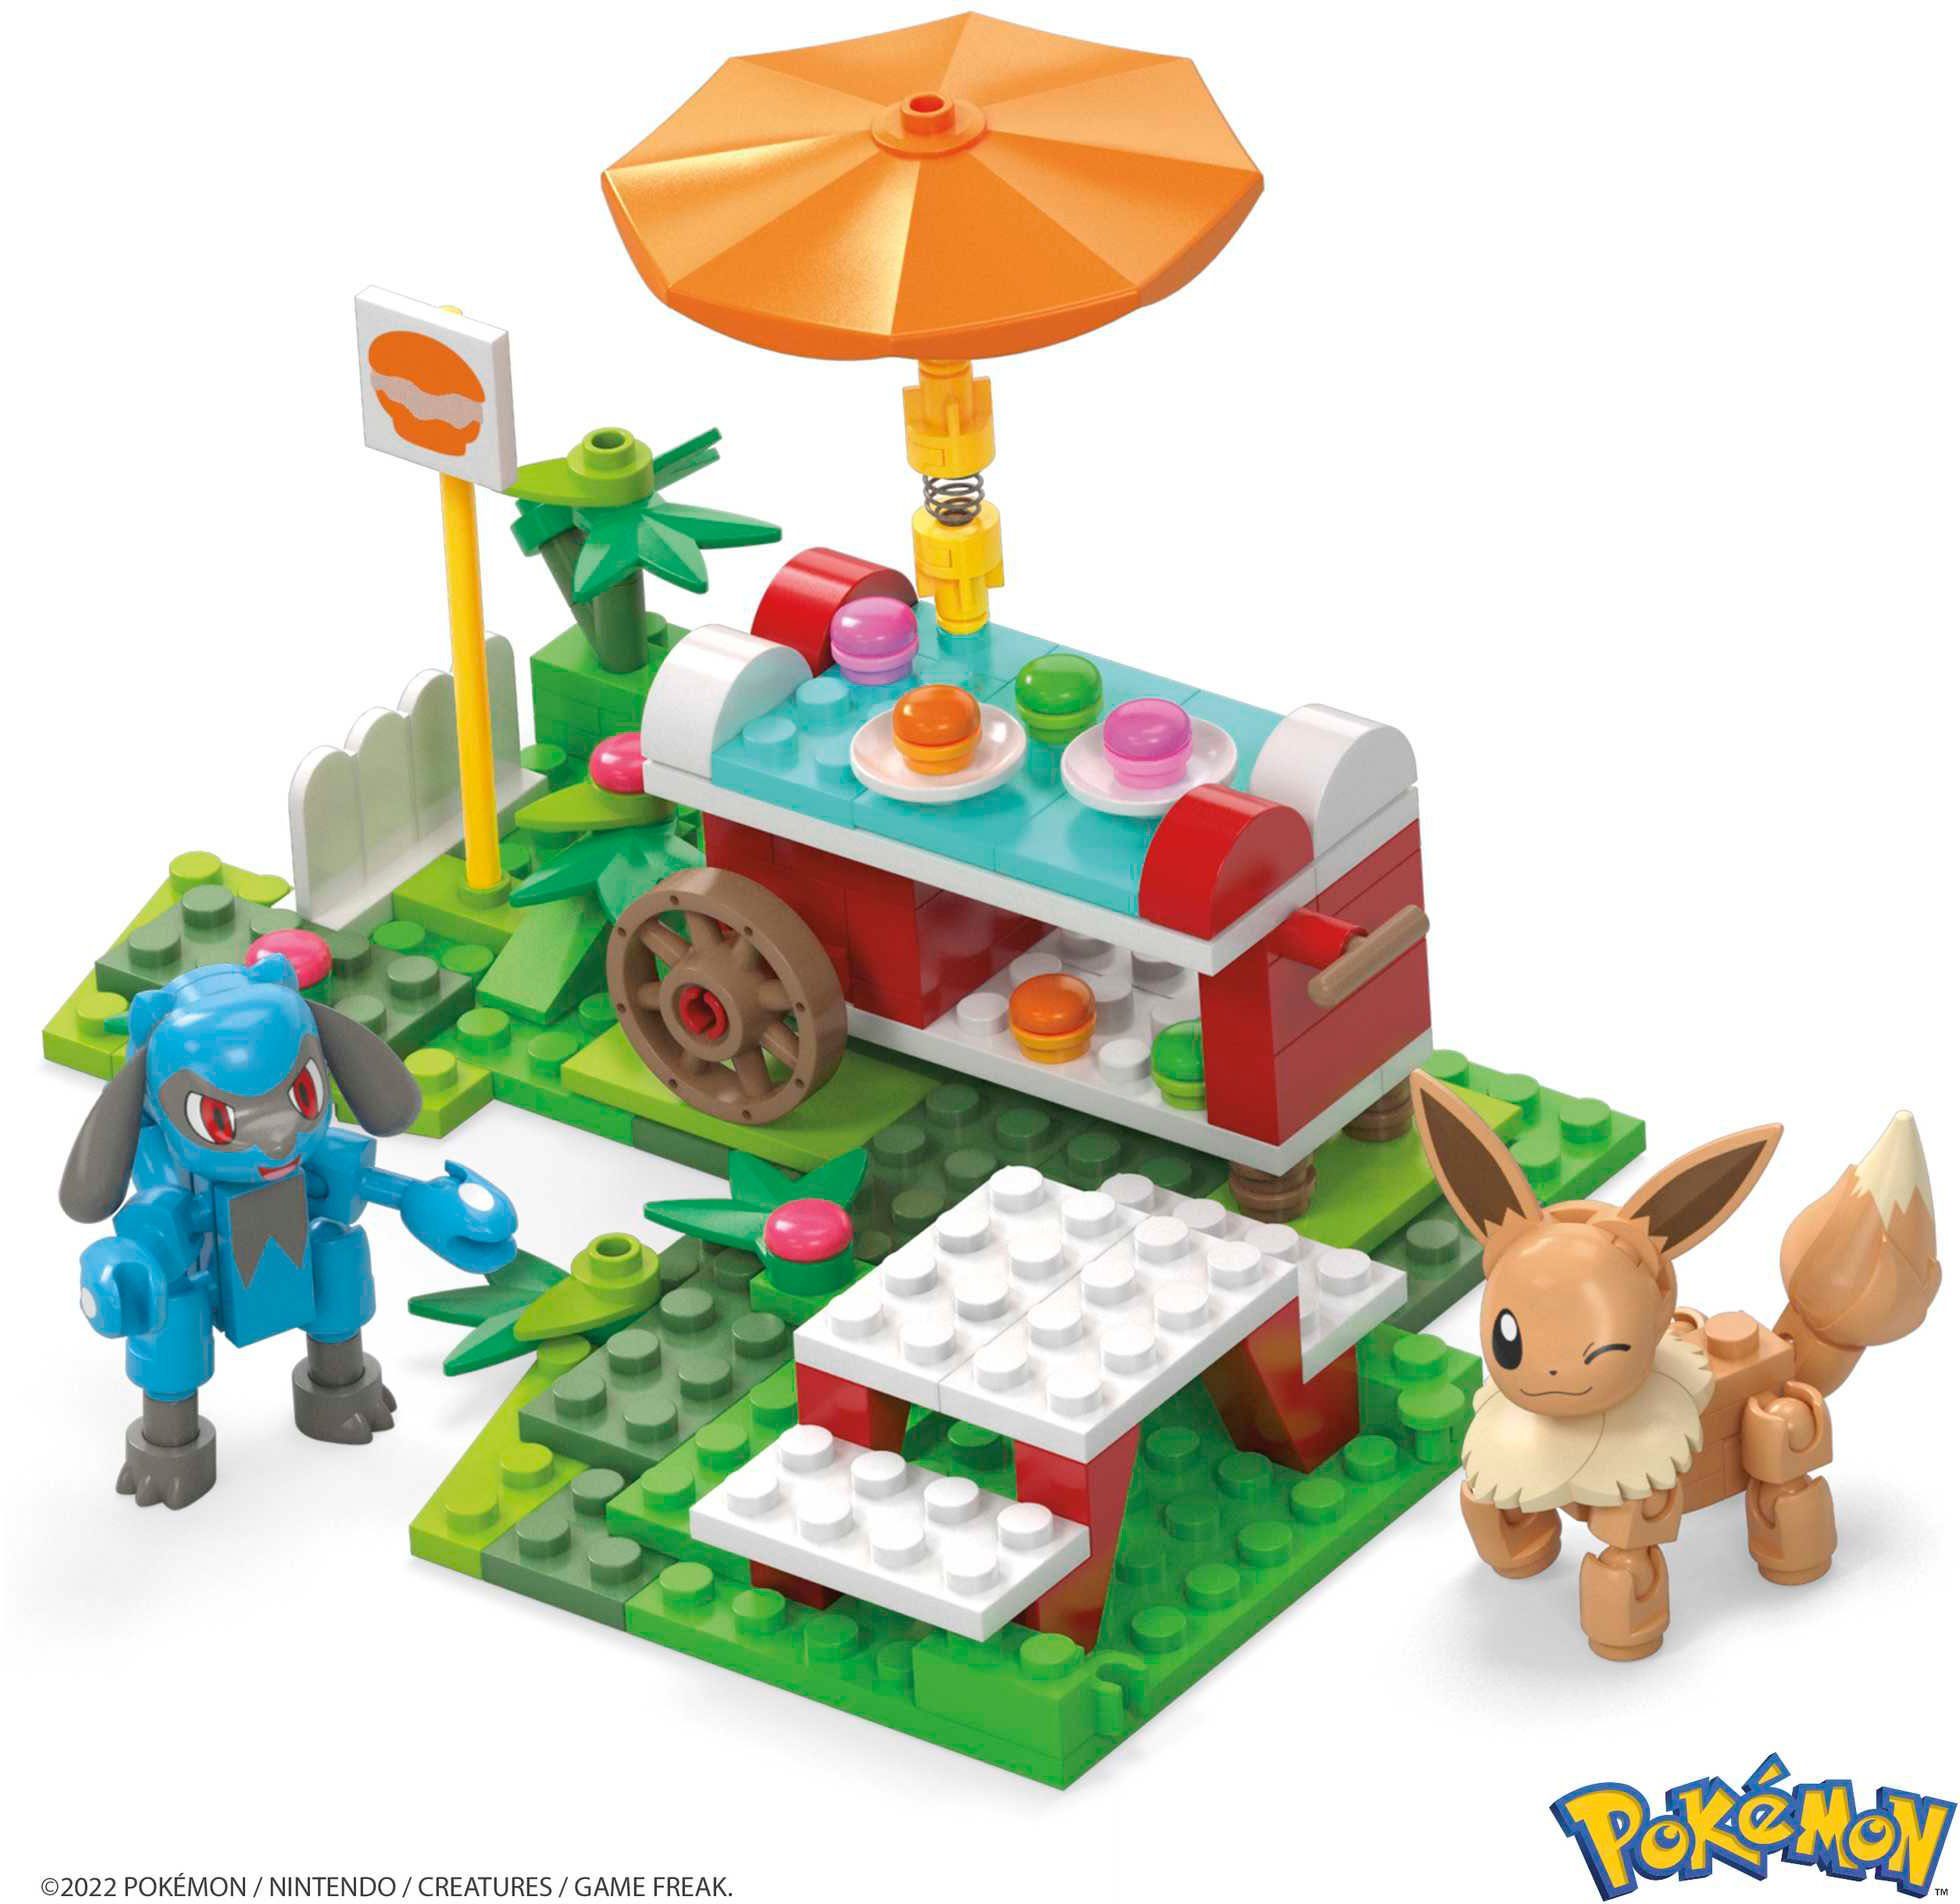 MEGA Konstruktions-Spielset Pokémon Picknick Bauset Abenteuer